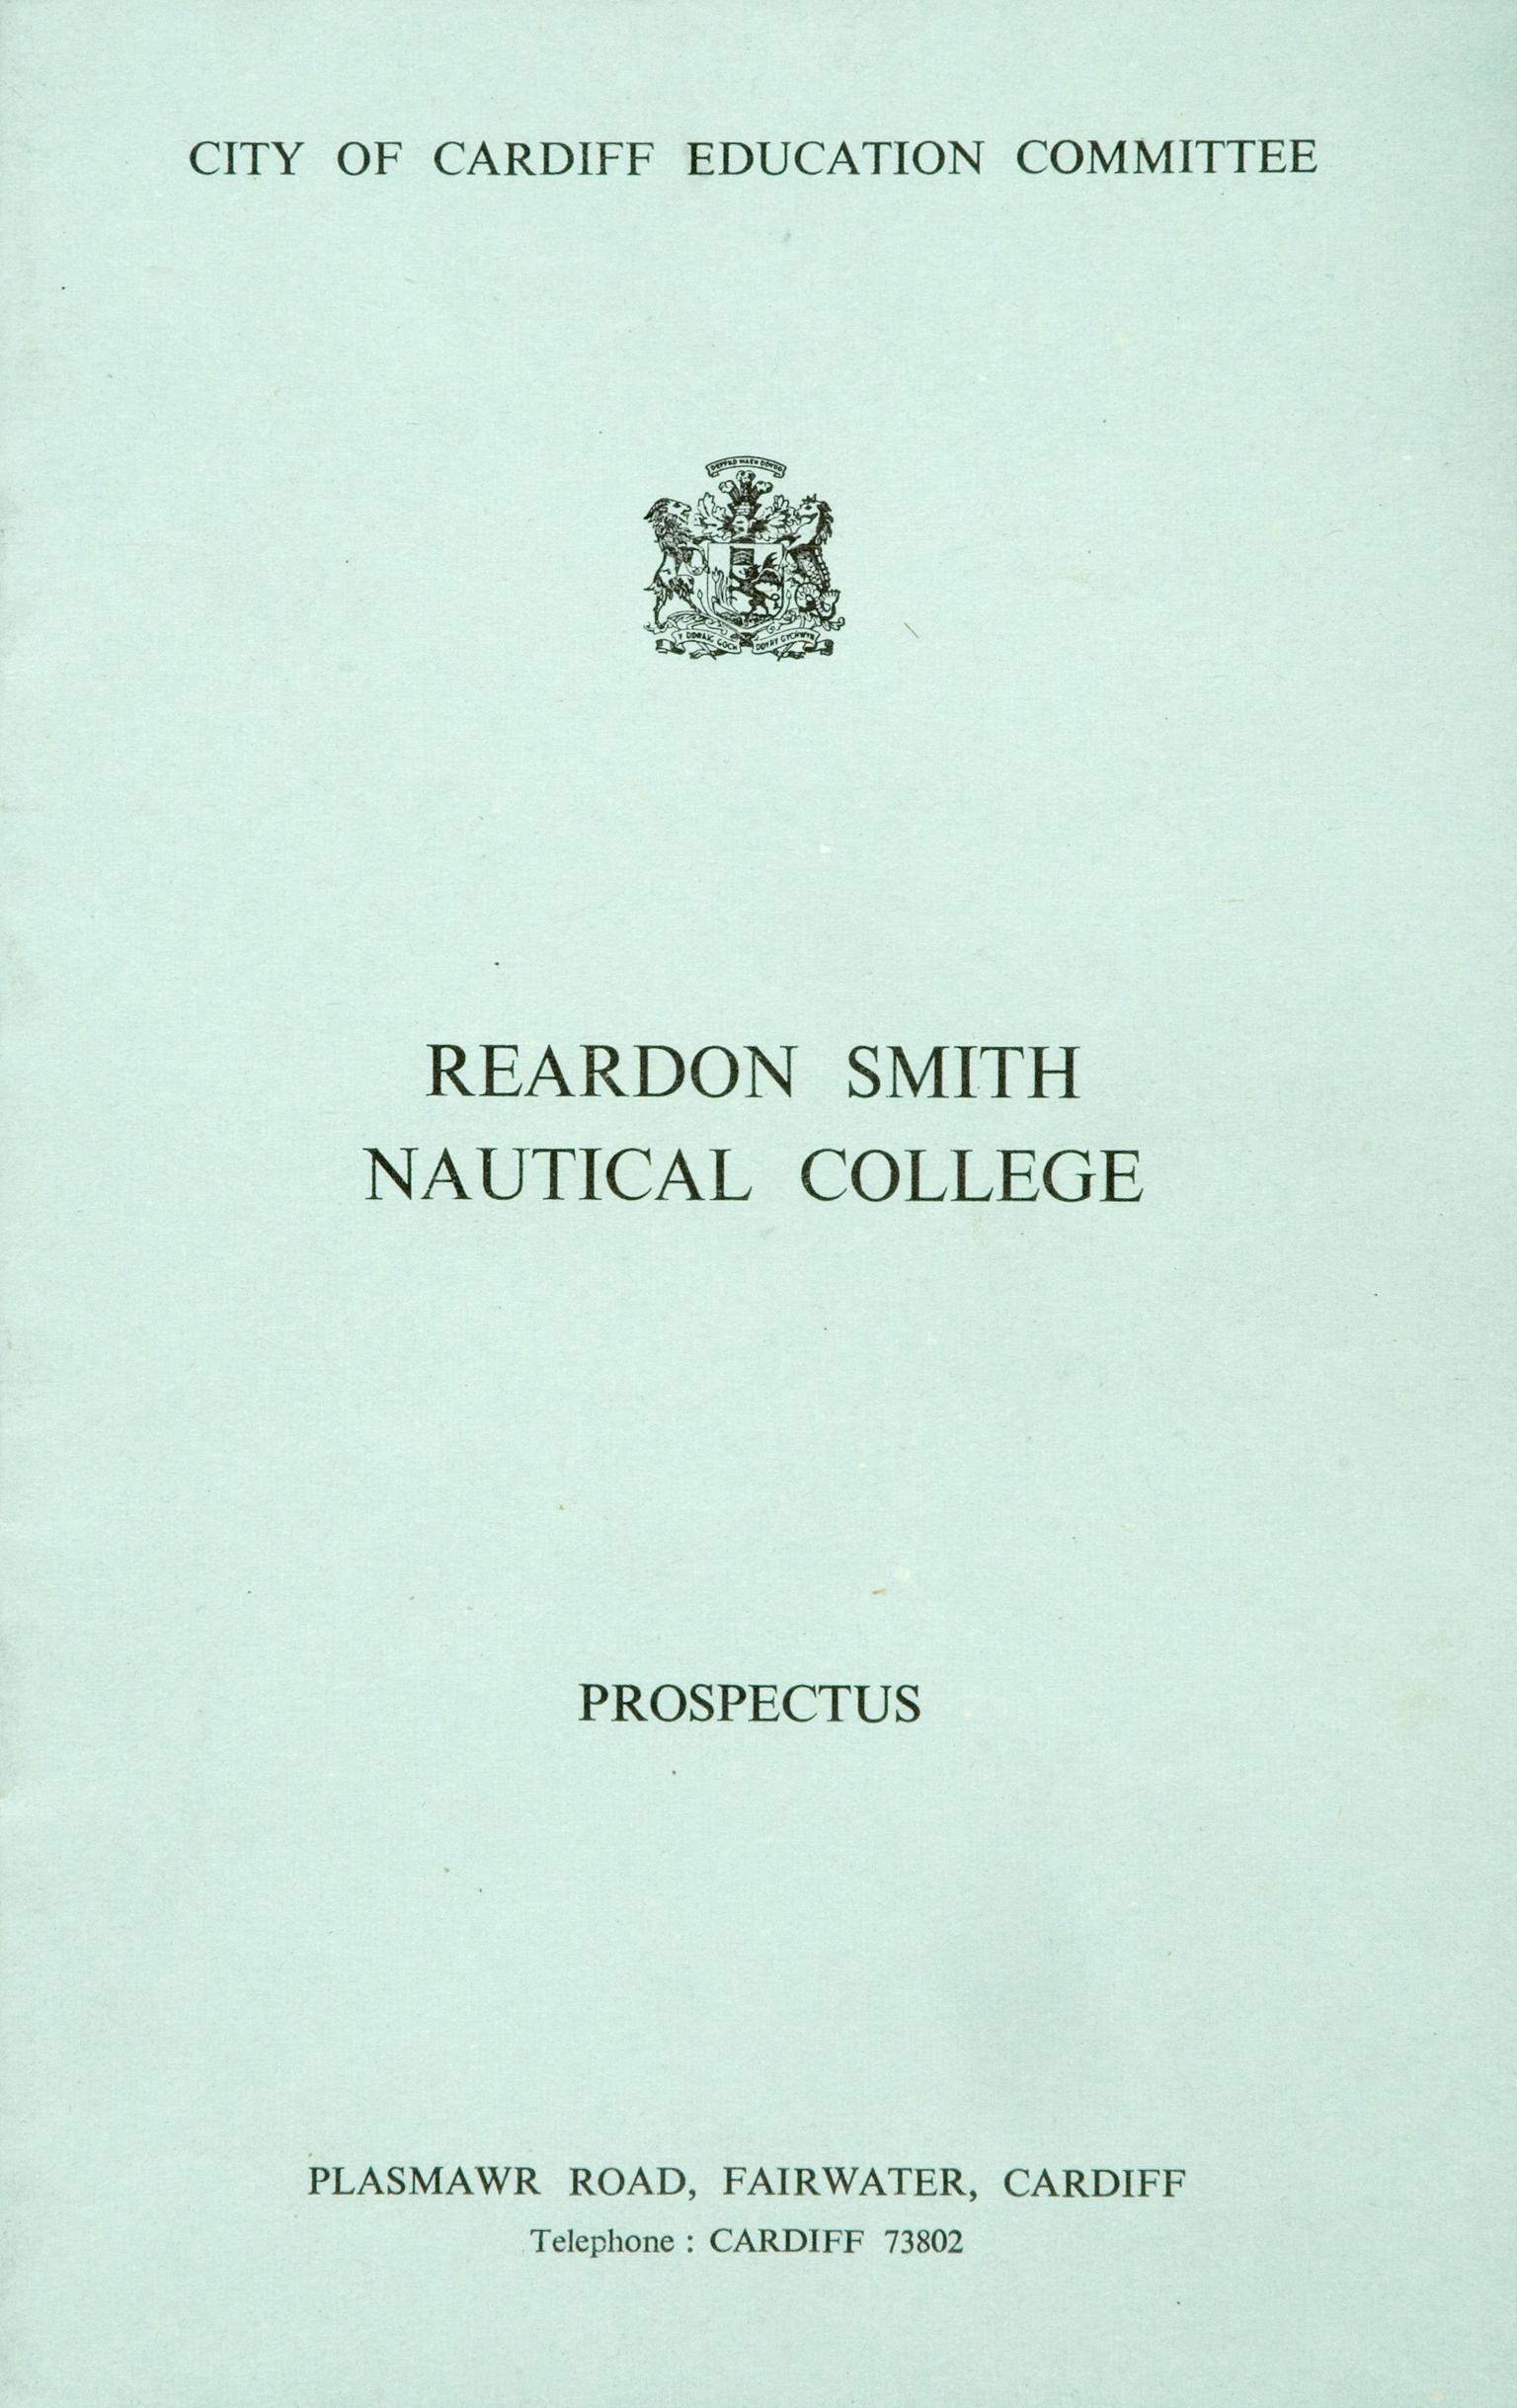 Reardon Smith Nautical College (prospectus)